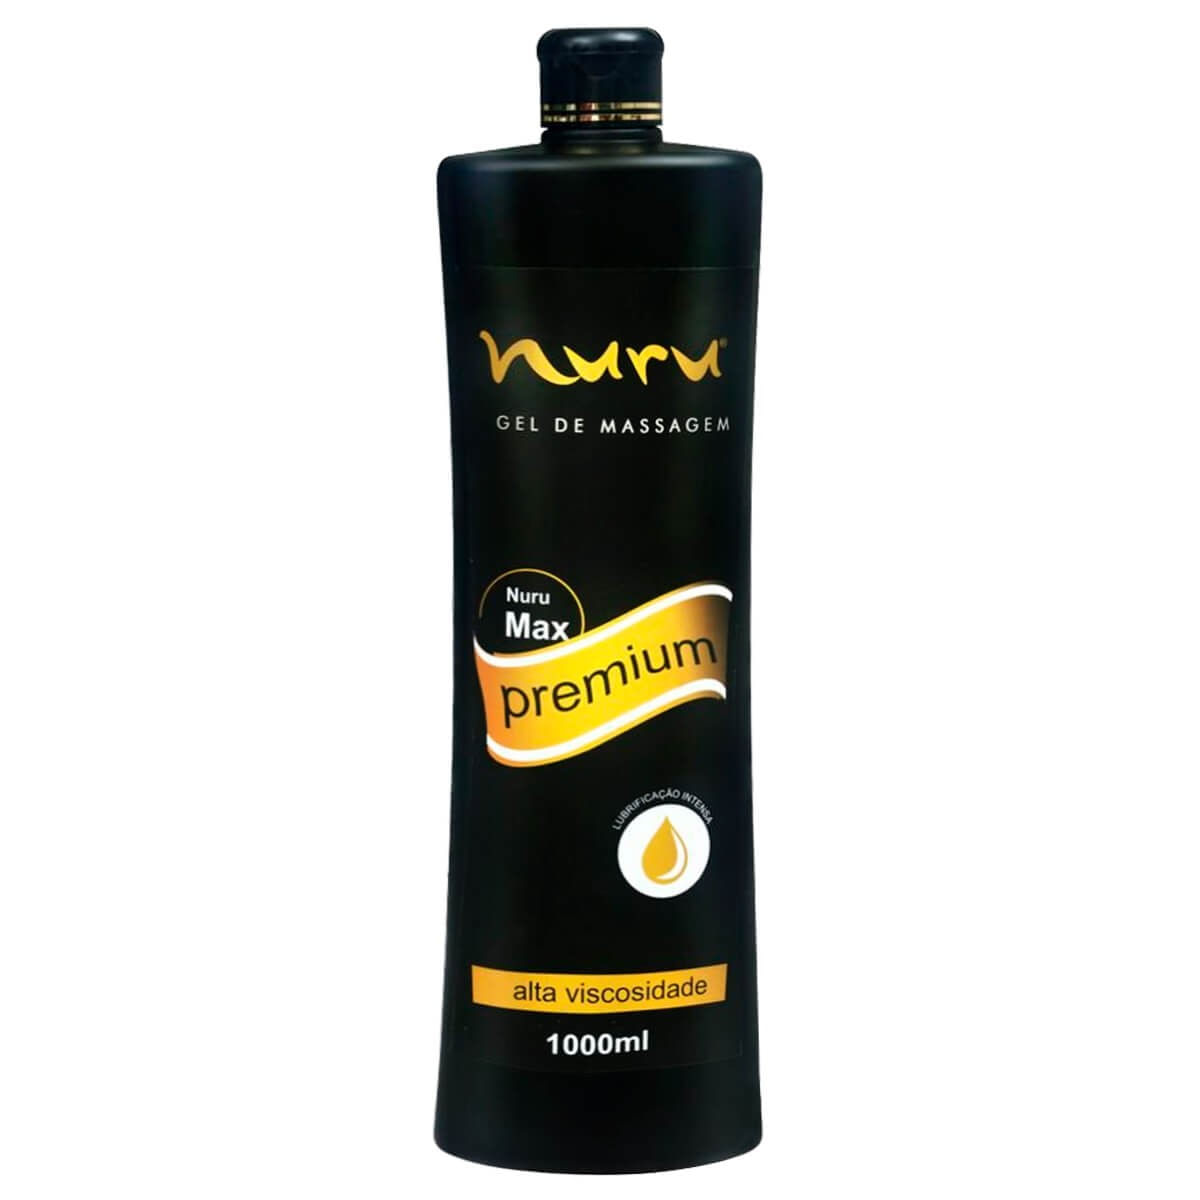 Nuru Premium Max Gel de Massagem Alta Viscosidade 1000ml Nuru